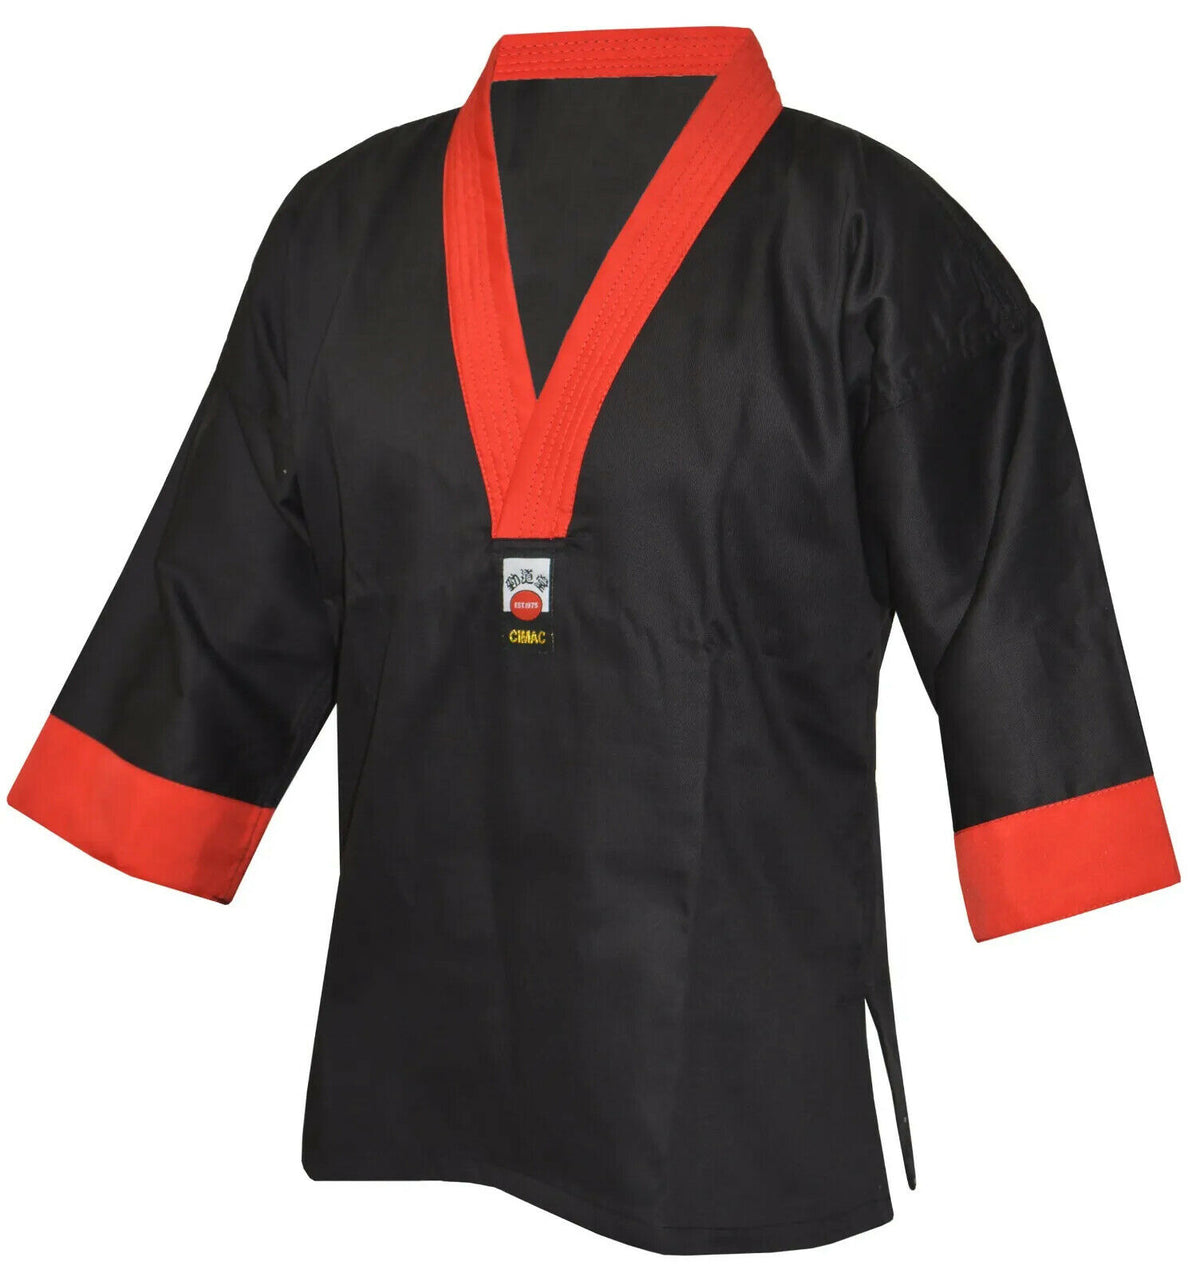 Mens Cimac Kickboxing Jacket Martial Arts V-Neck  - Black & Red - Hamtons Direct